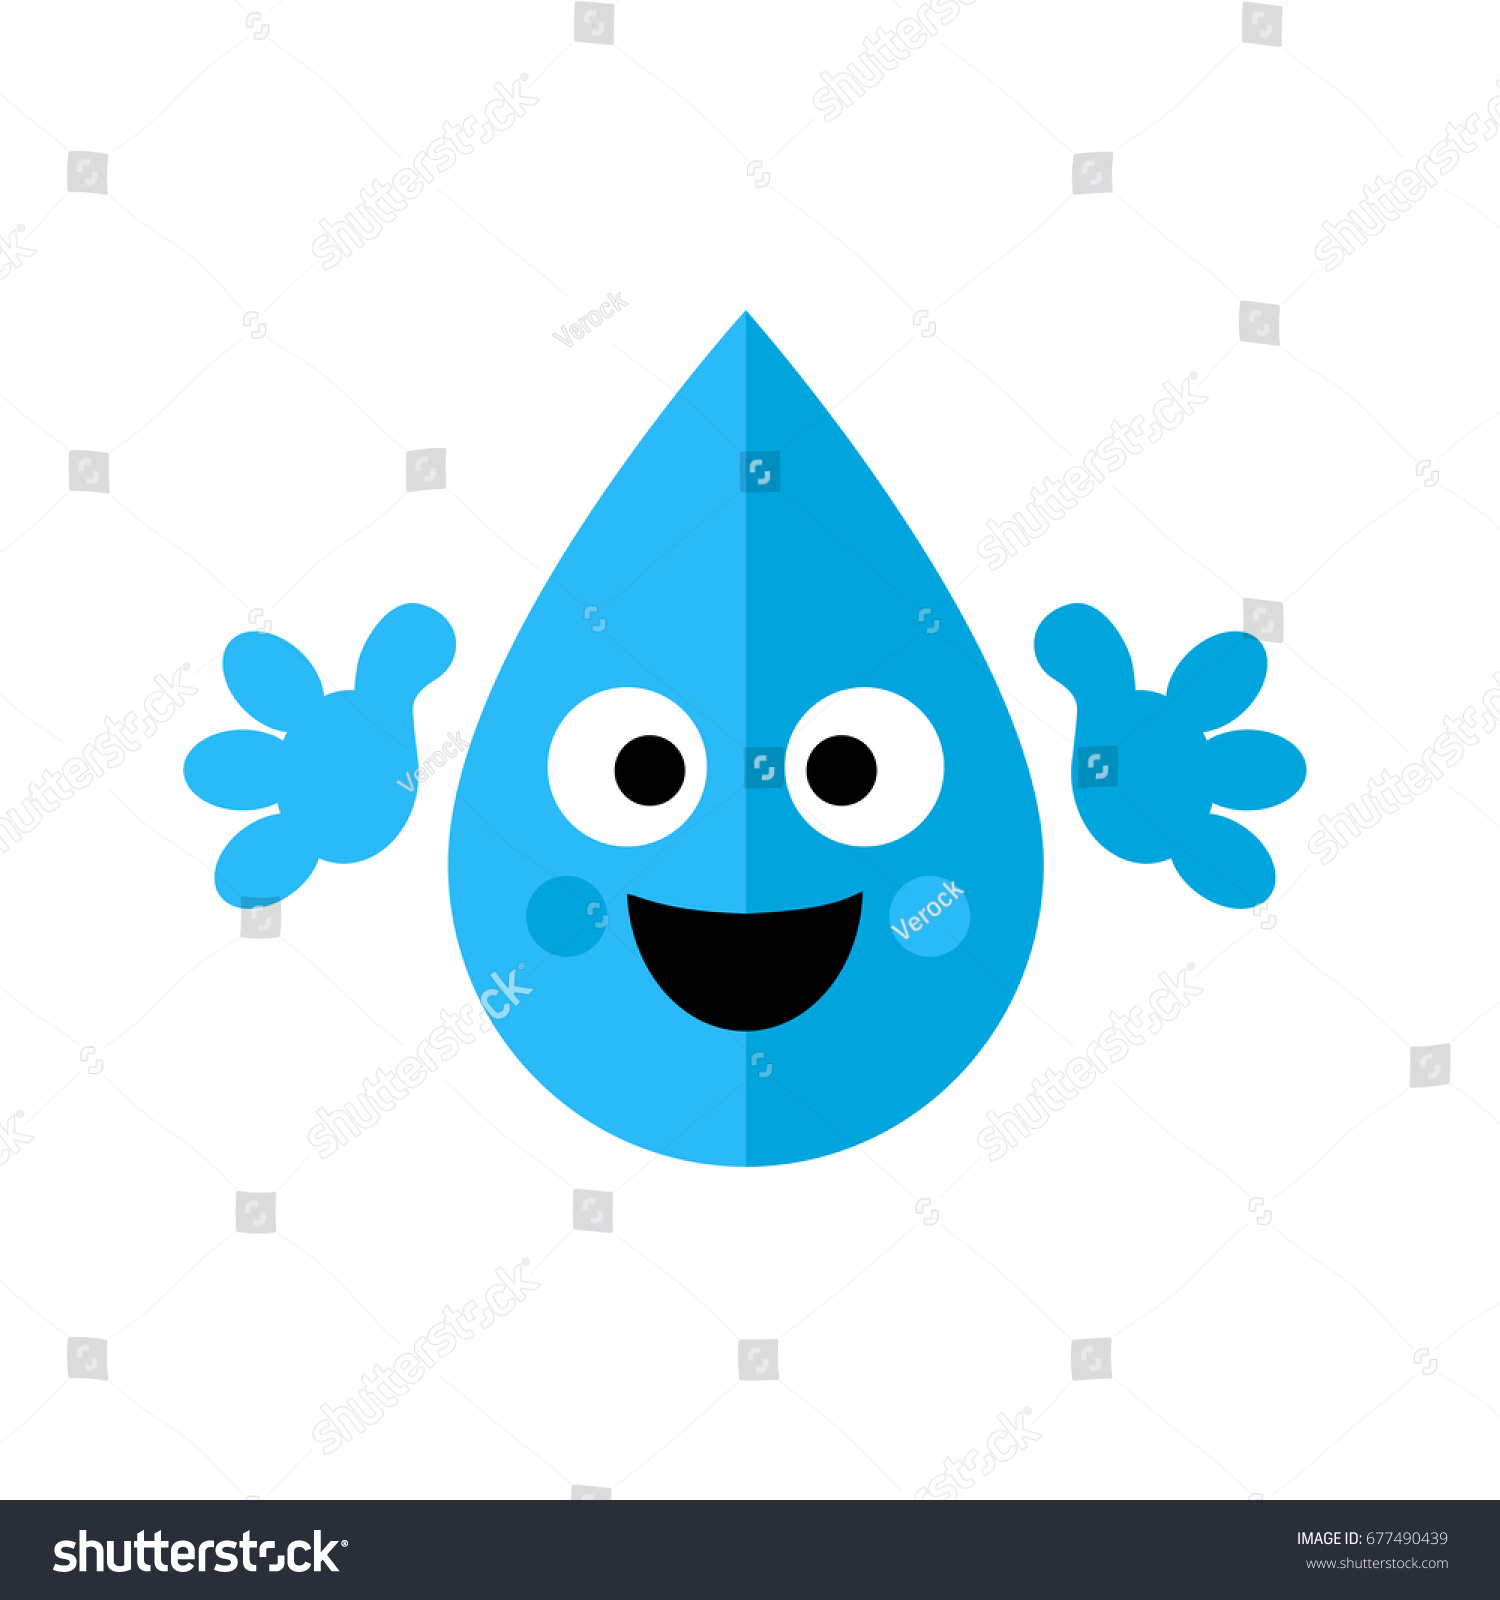 Happy Water Drop Cartoon Character Icon Stock Illustration 677490439 ...